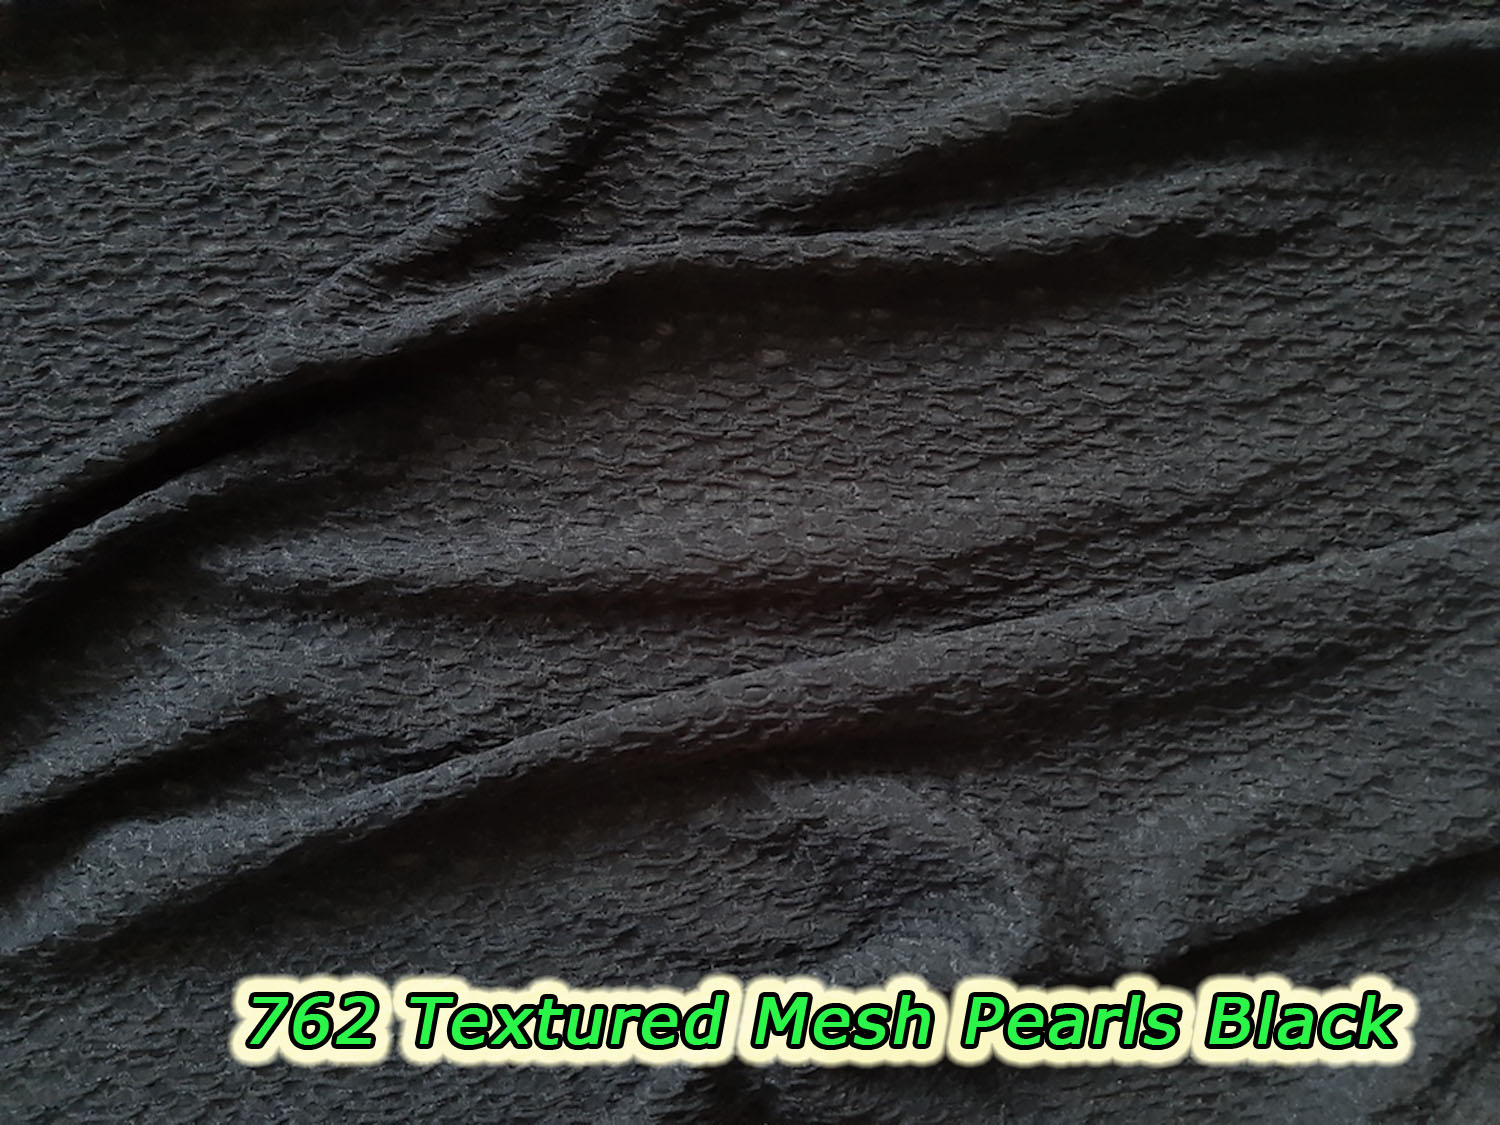 762 Textured Mesh Pearls Black